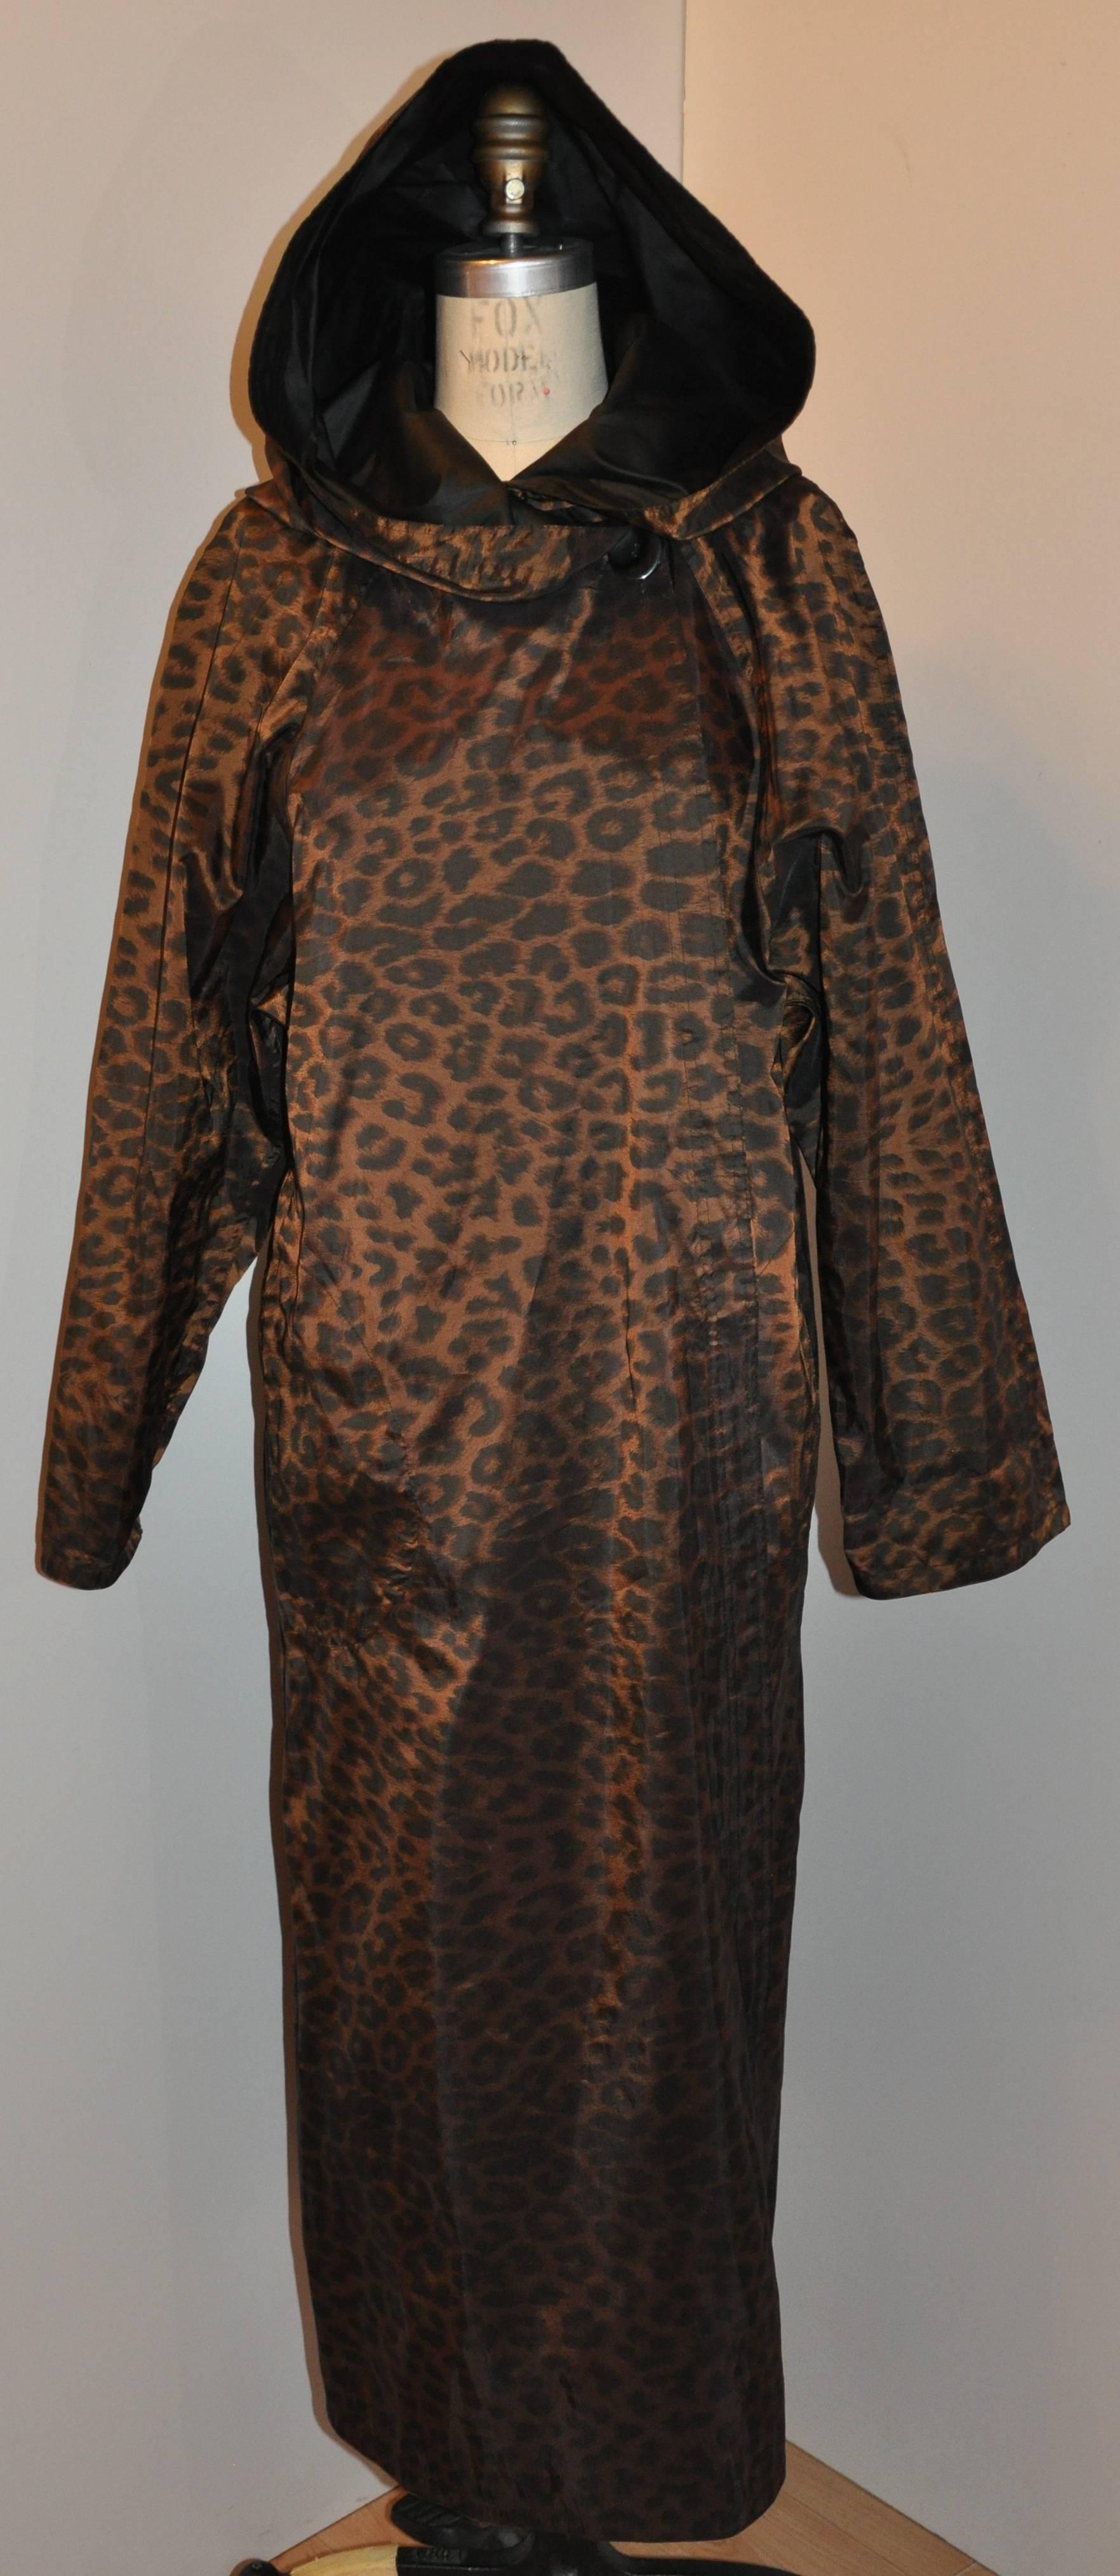 leopard raincoat